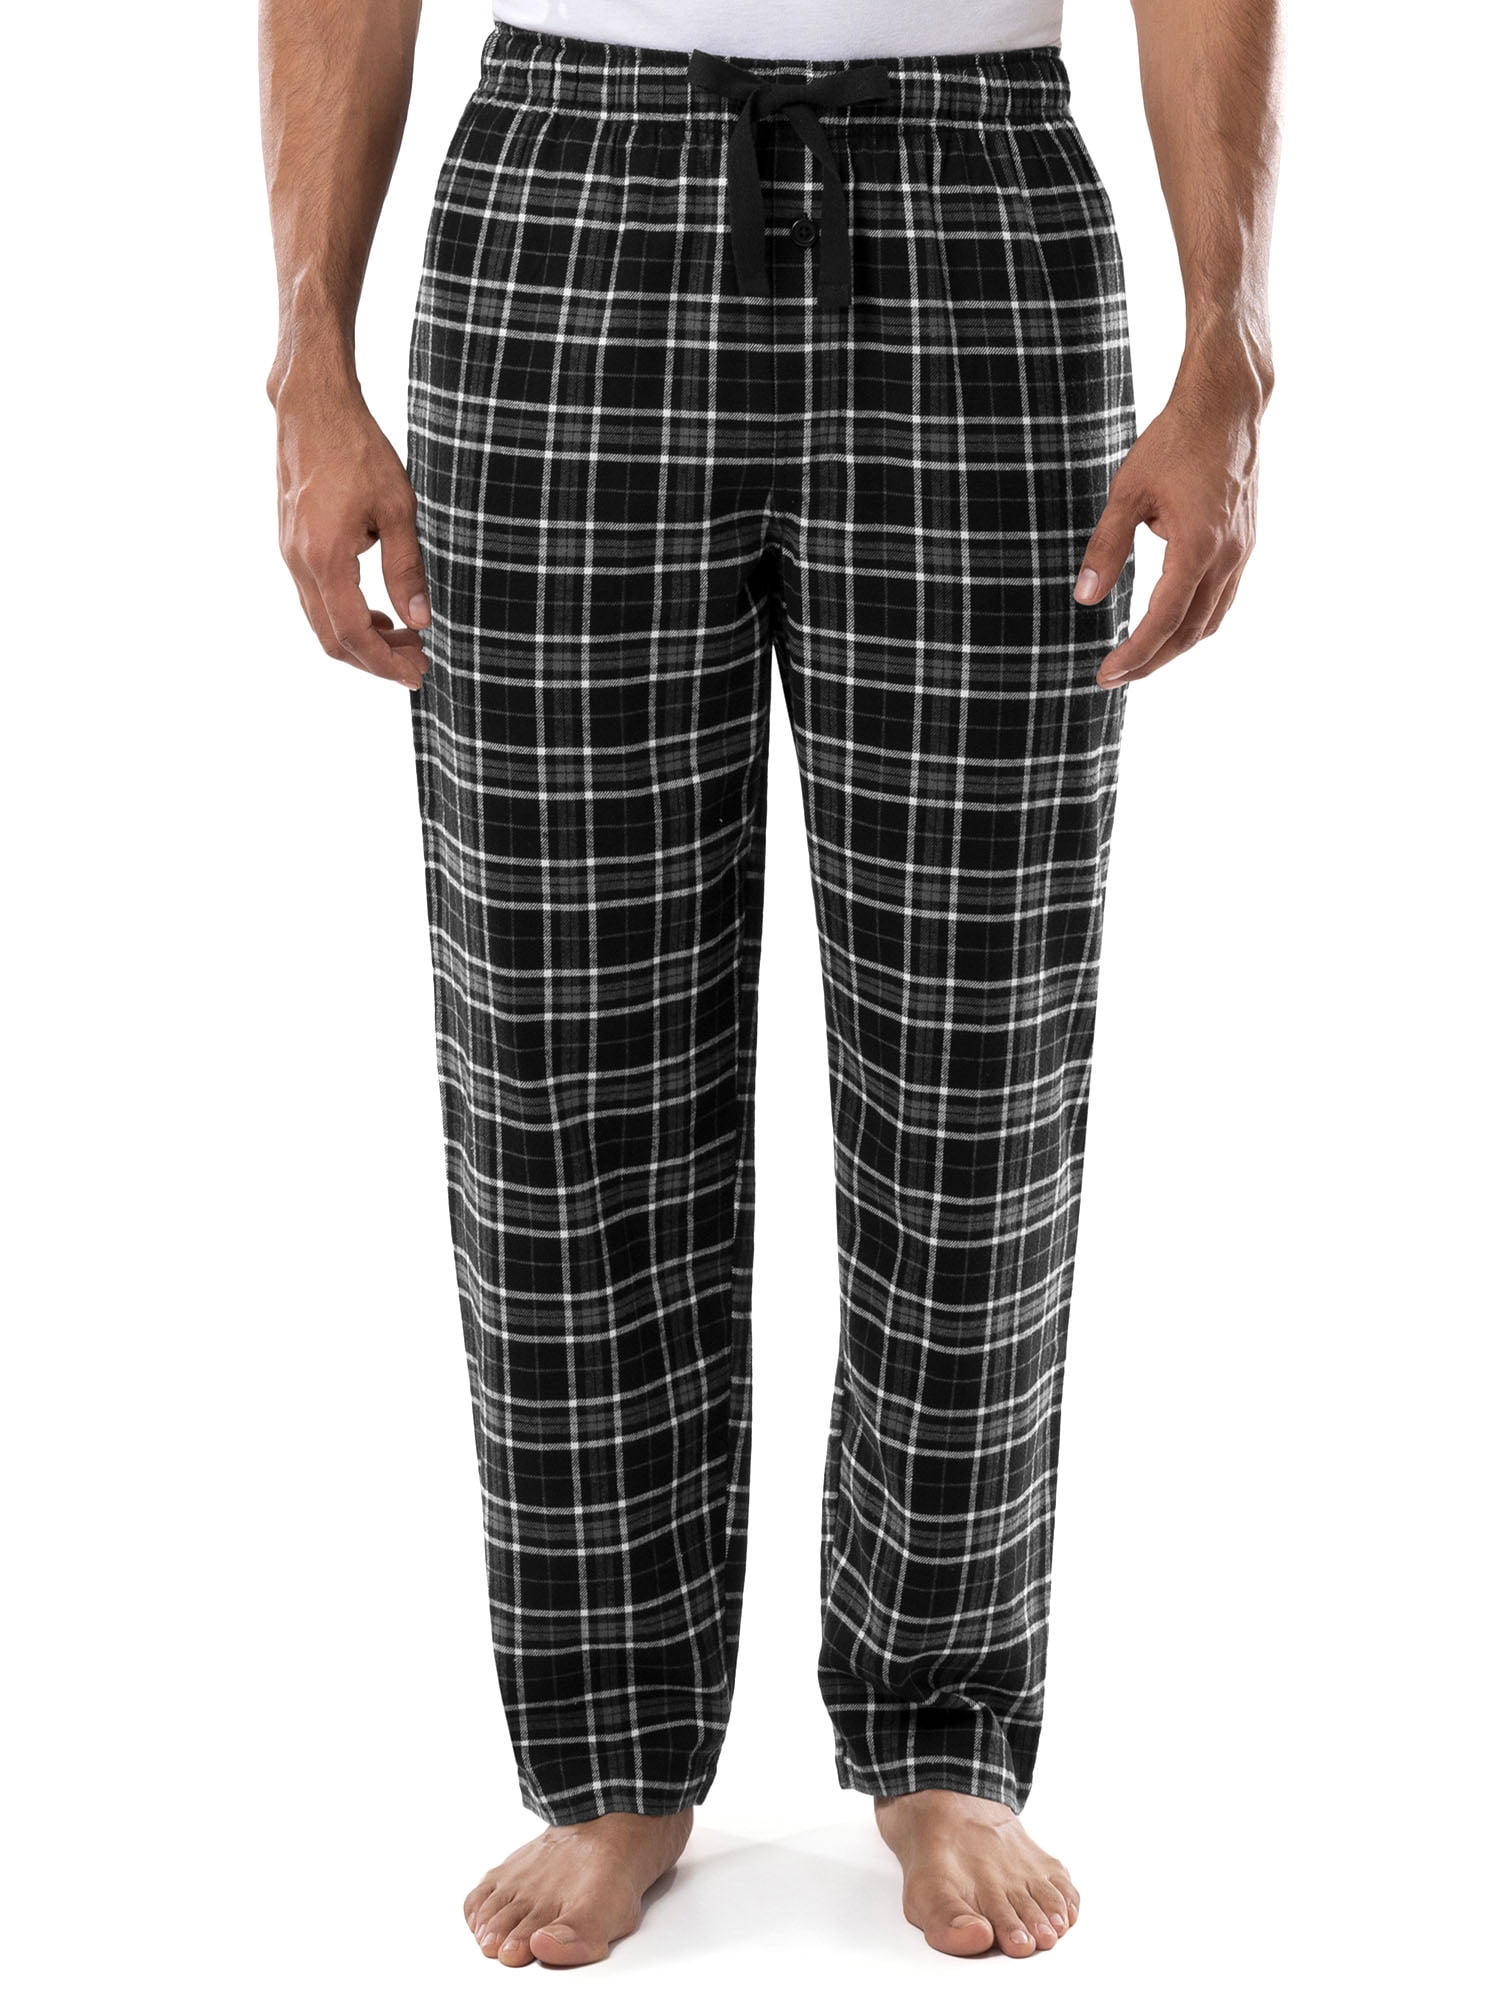 Women's Personalized Custom Print Flannel Pajama Pants | Zynotti